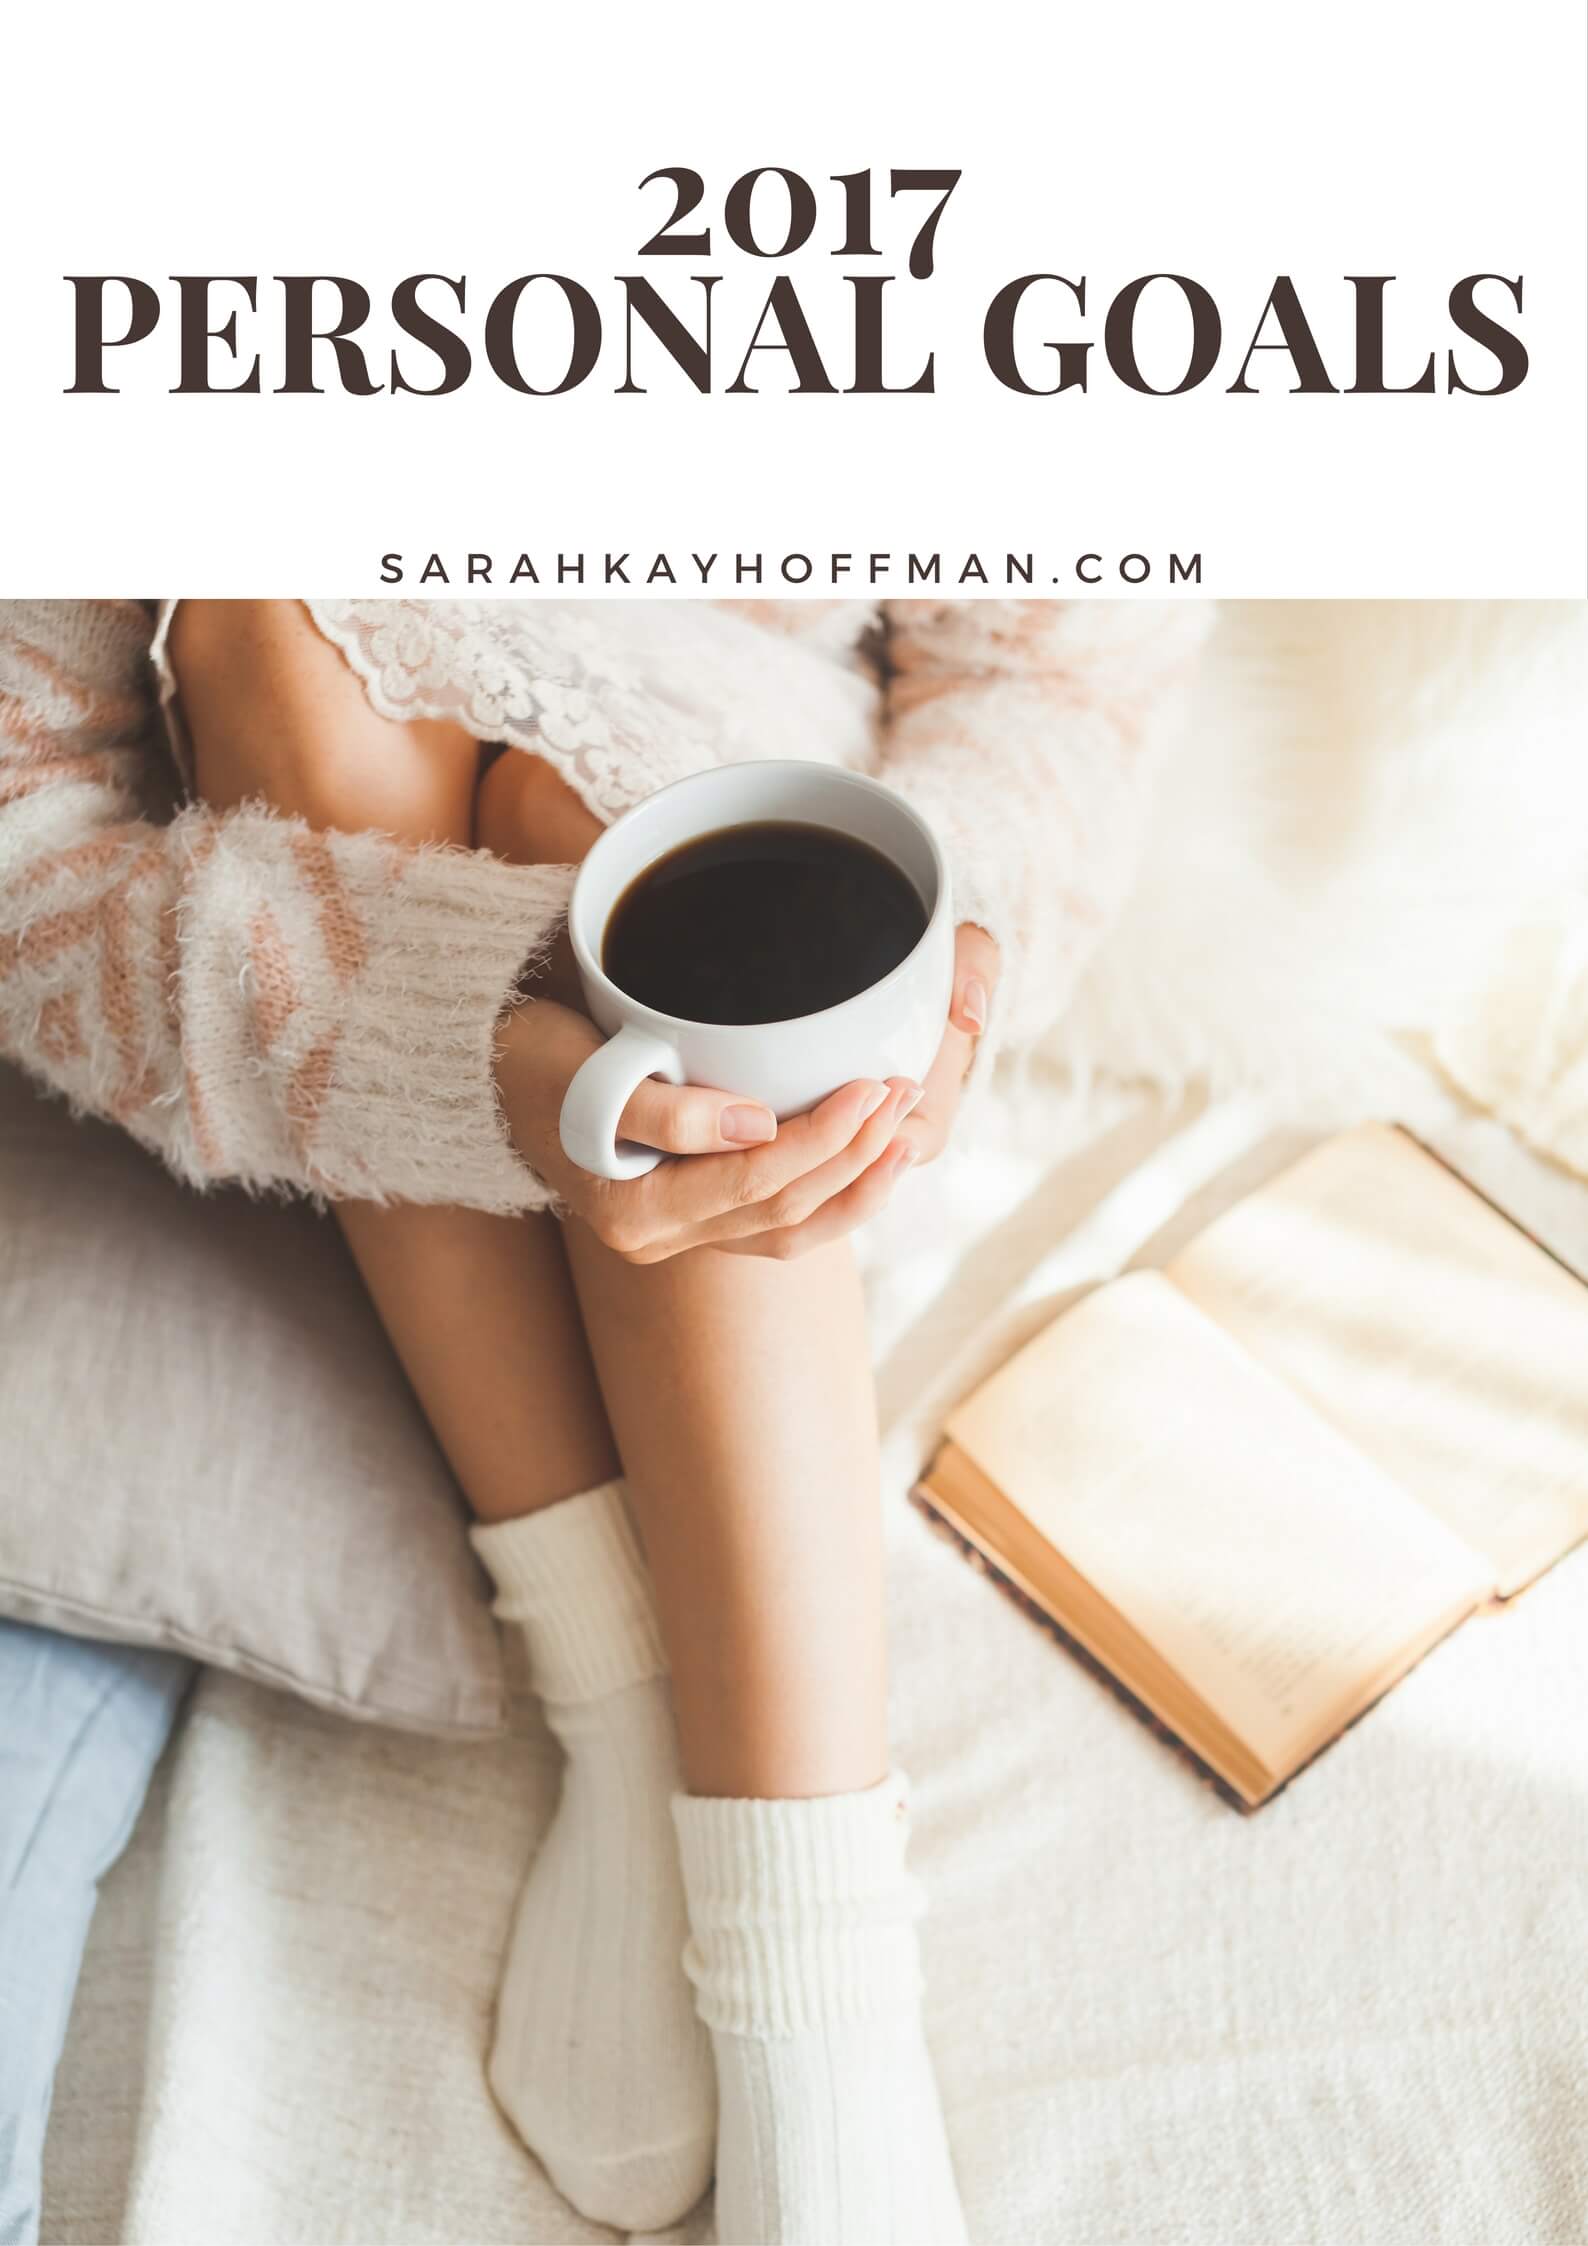 2017 Personal Goals New Year Goal sarahkayhoffman.com